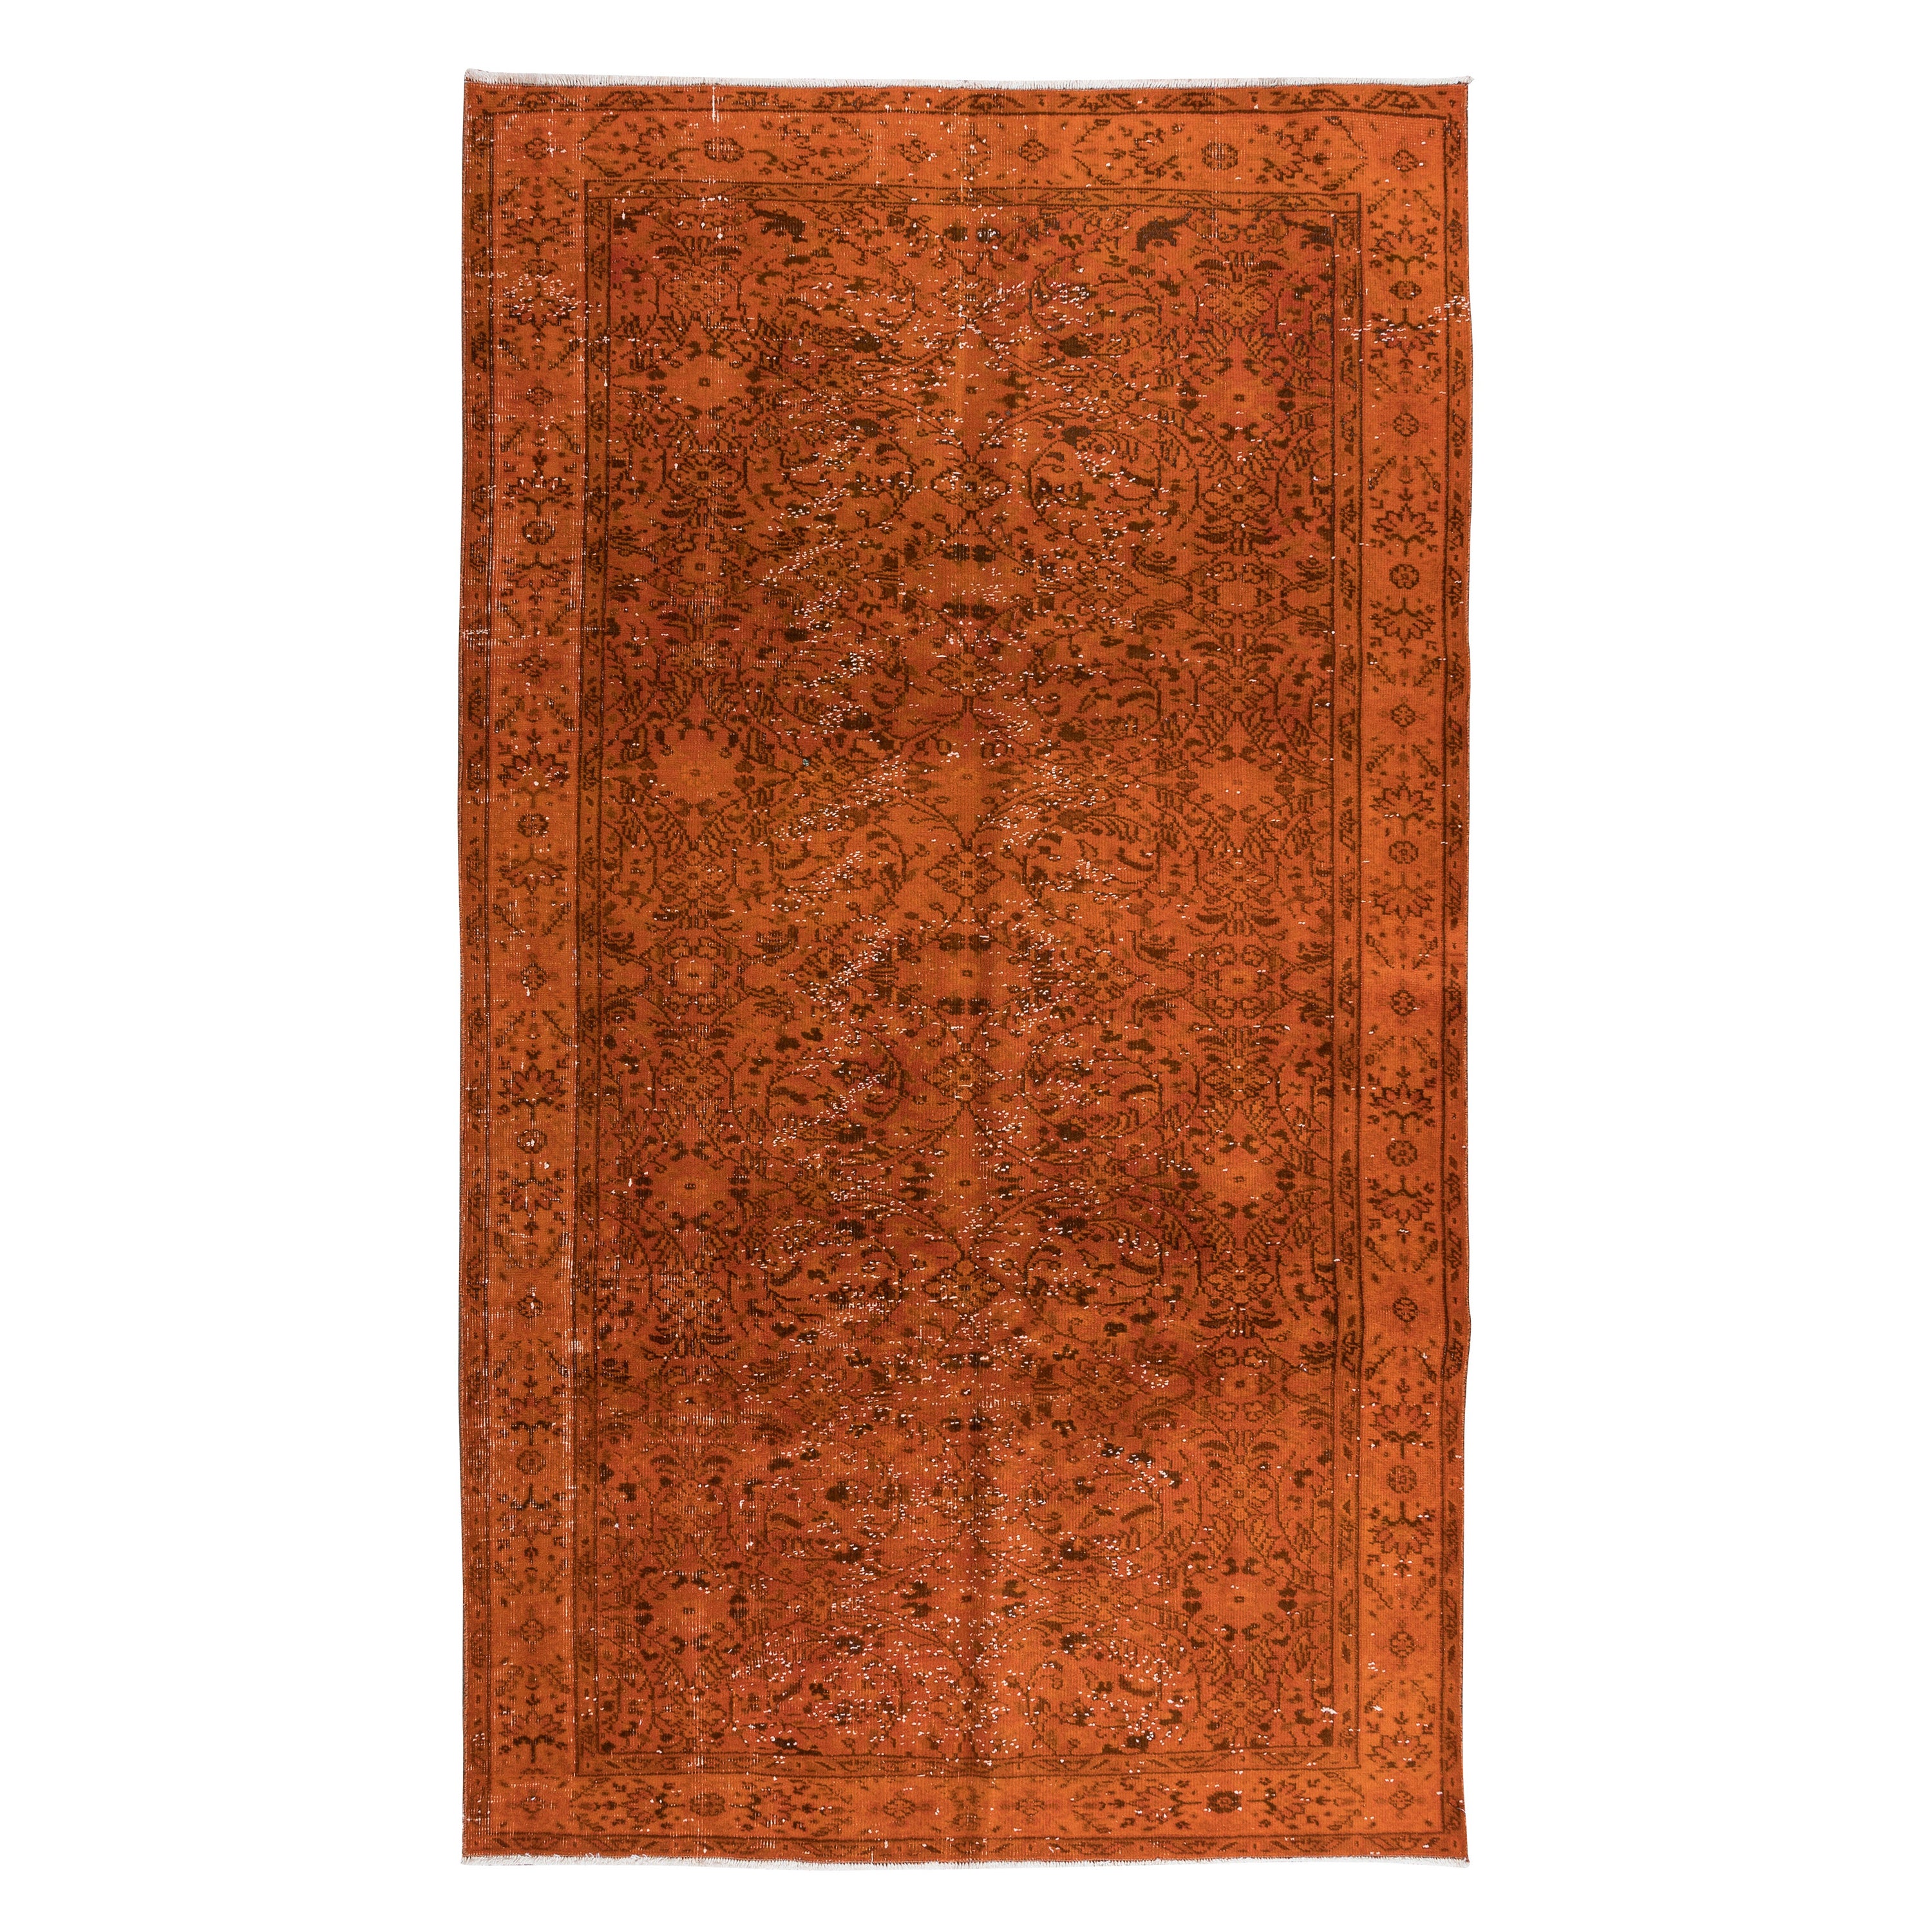 4.8x8.3 Ft Handmade Orange Area Rug from Turkey, Modern Anatolian Wool Carpet